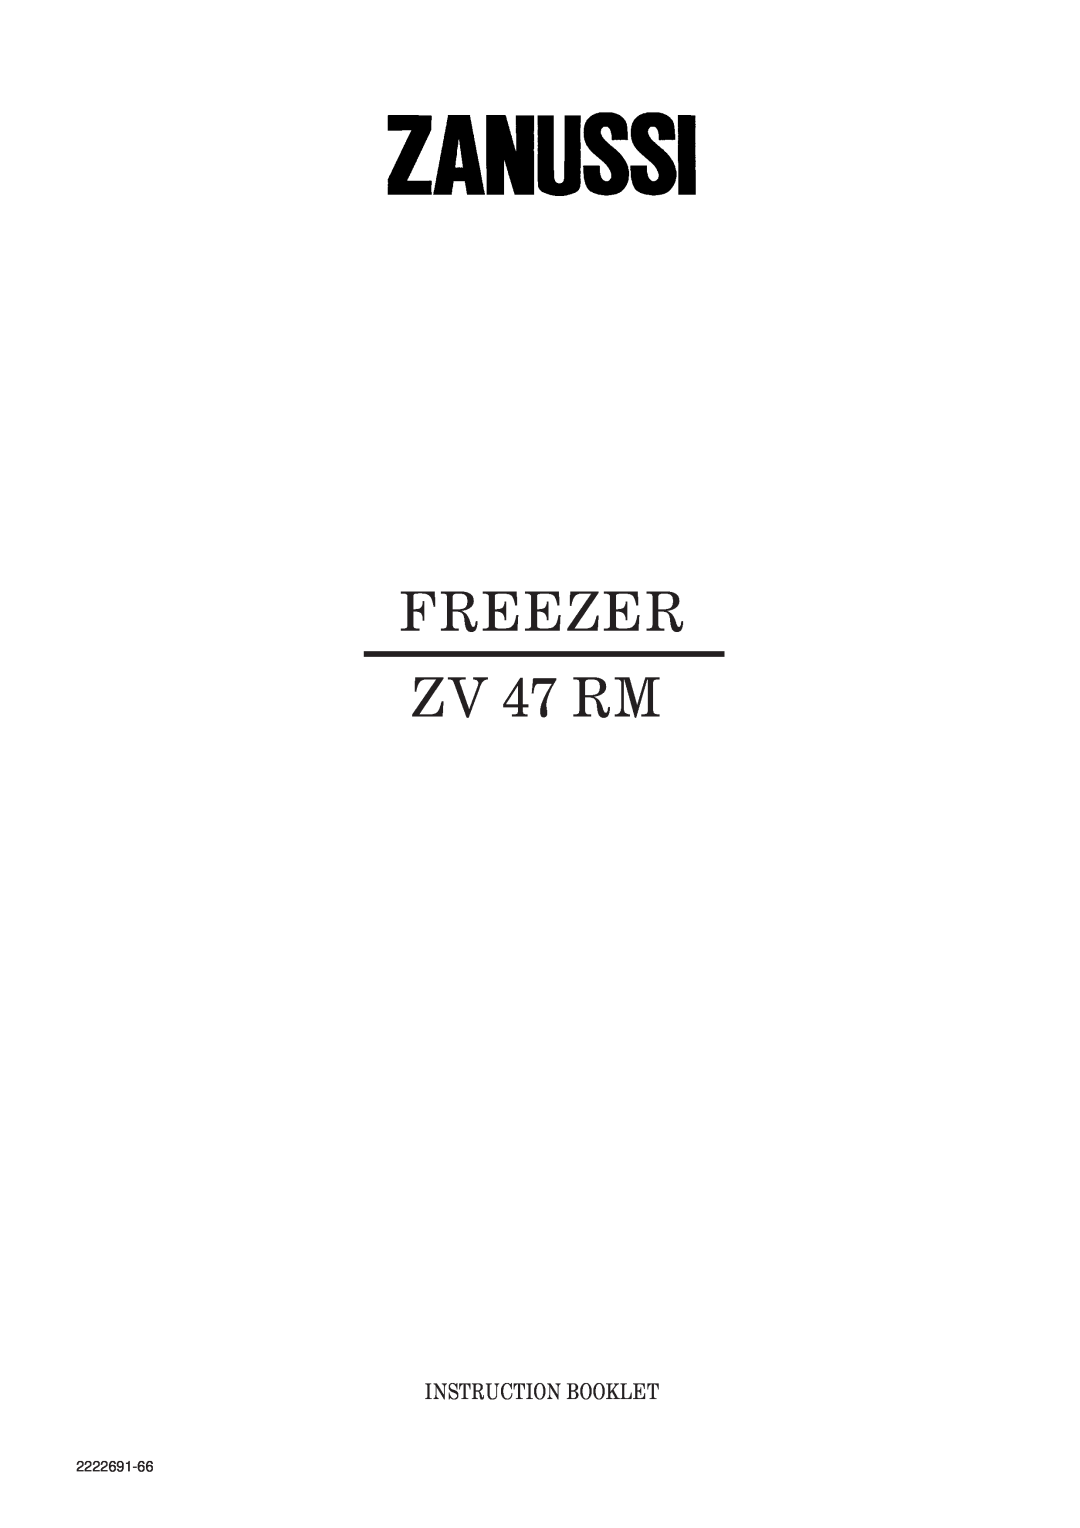 Zanussi manual FREEZER ZV 47 RM, Instruction Booklet, 2222691-66 